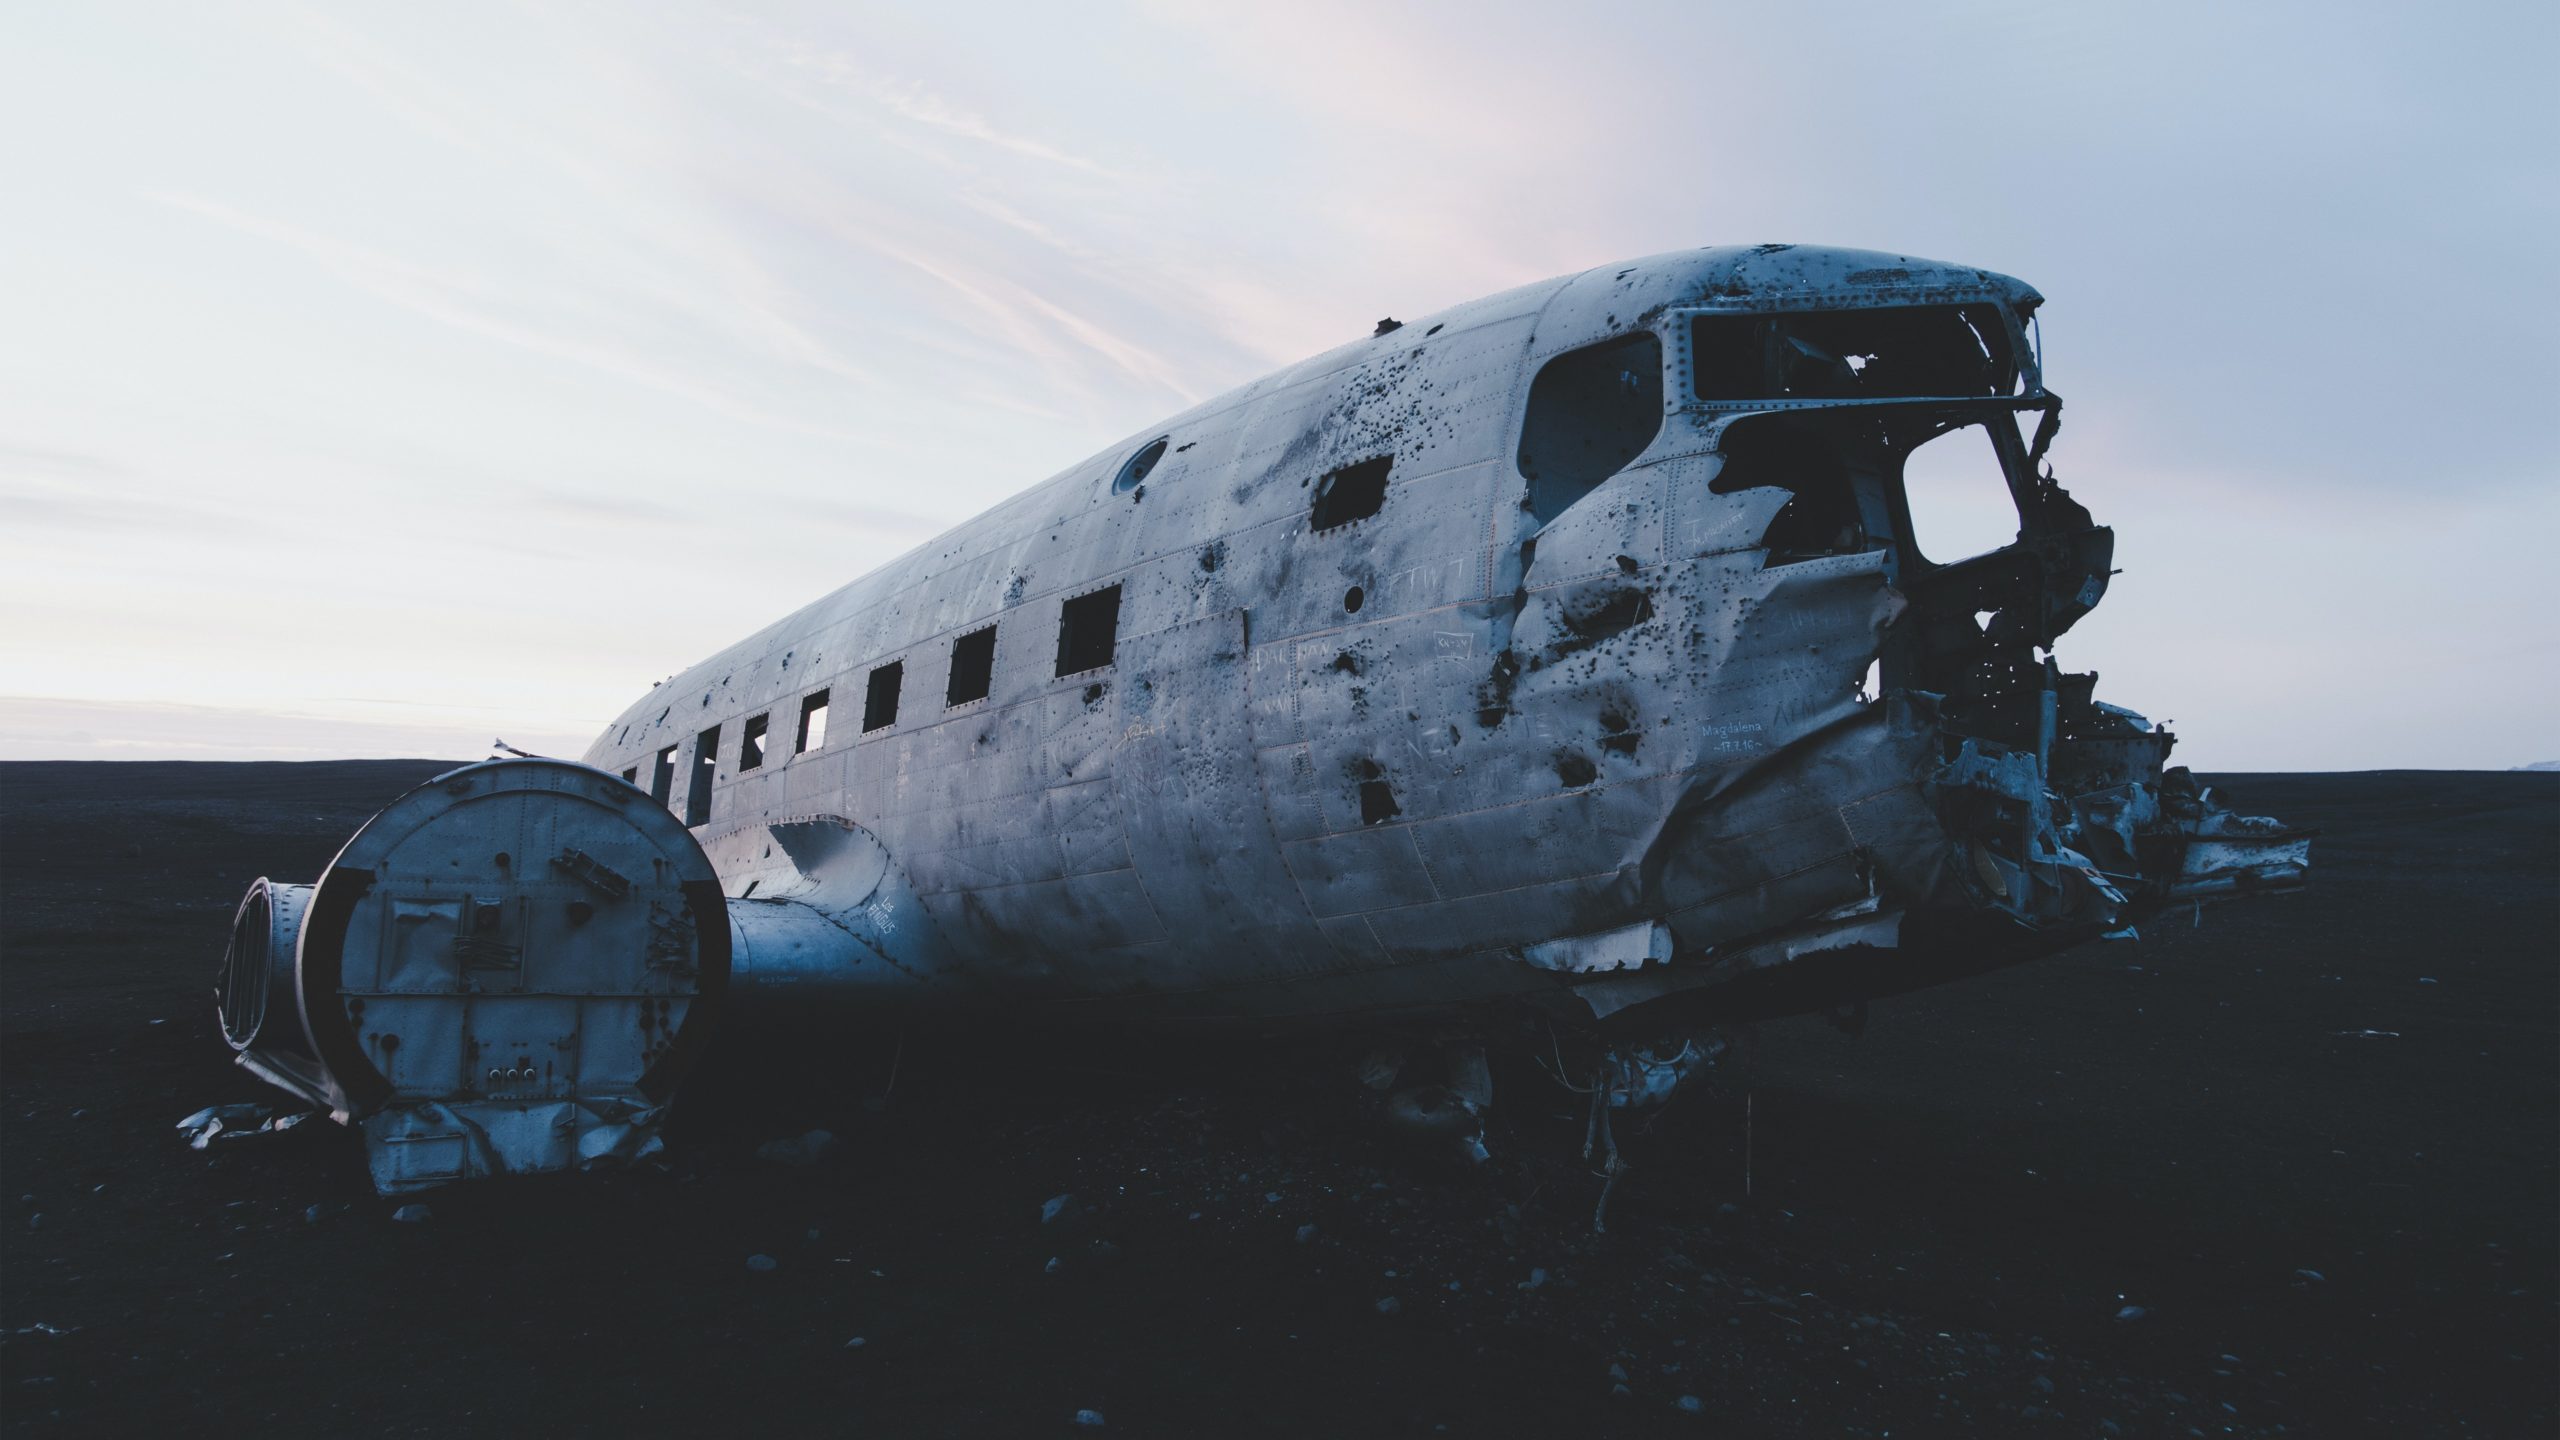 The Douglas Dakota plane wreck in Iceland